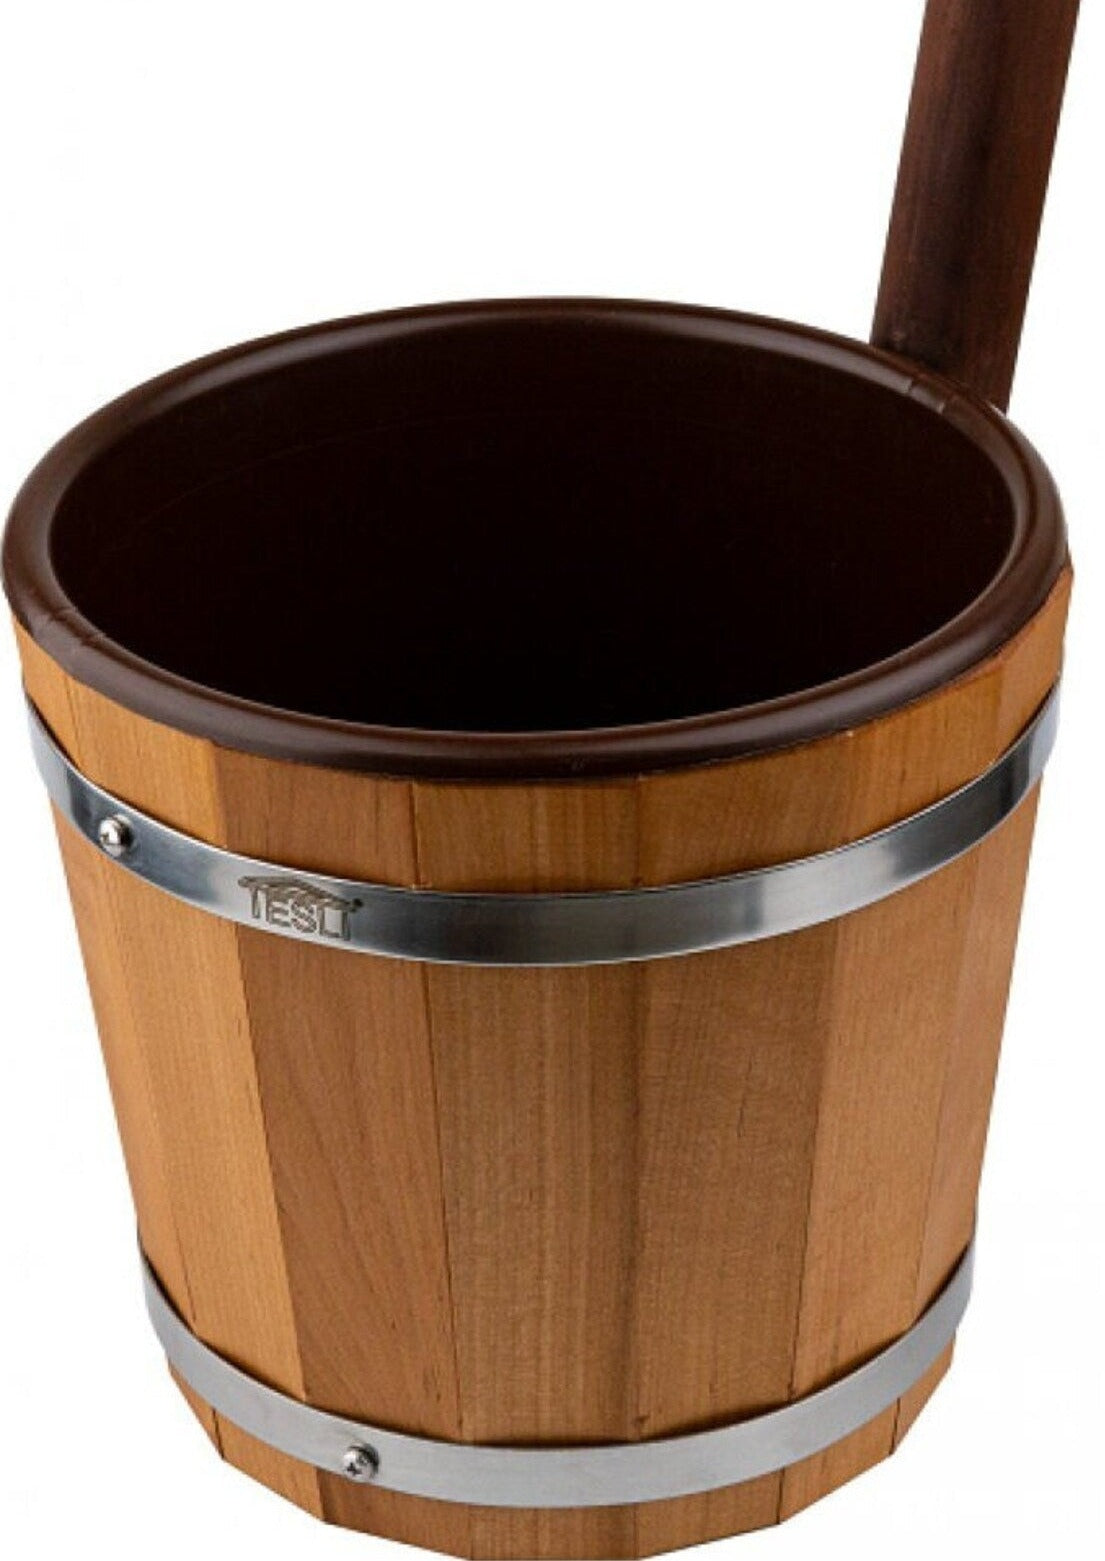 Wood Bath Bucket 5 L from thermal wood and plastics. insert